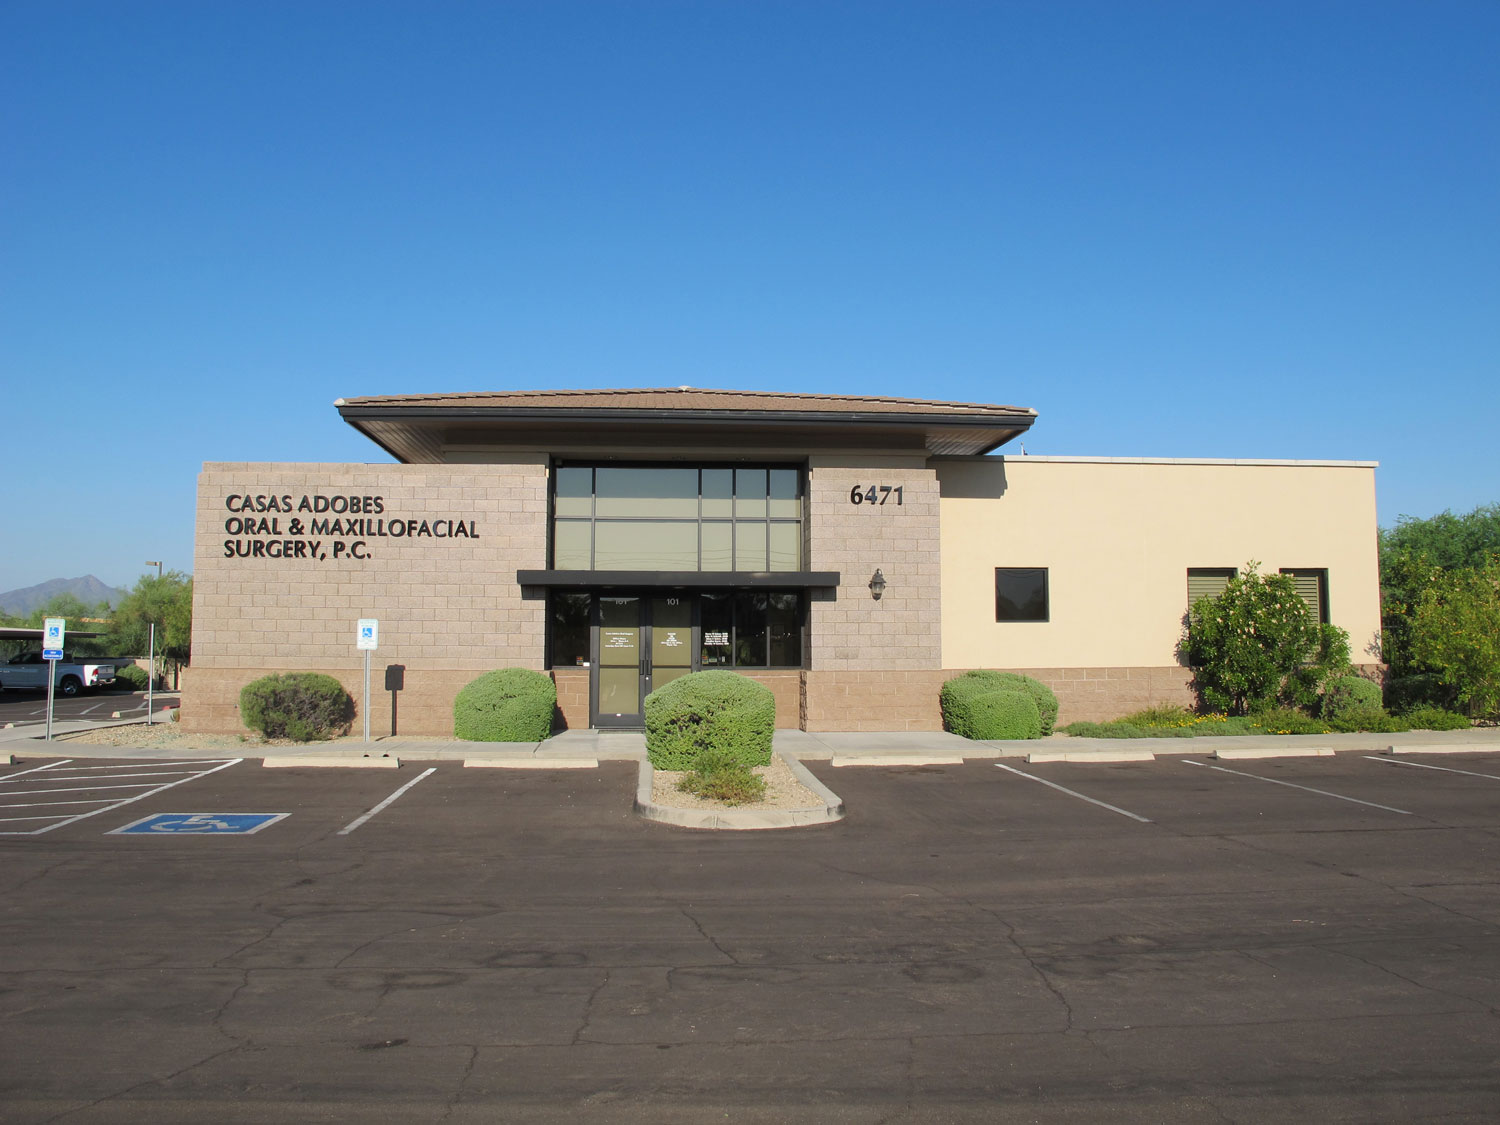 Casas Adobes Oral Surgery - Tucson, AZ 